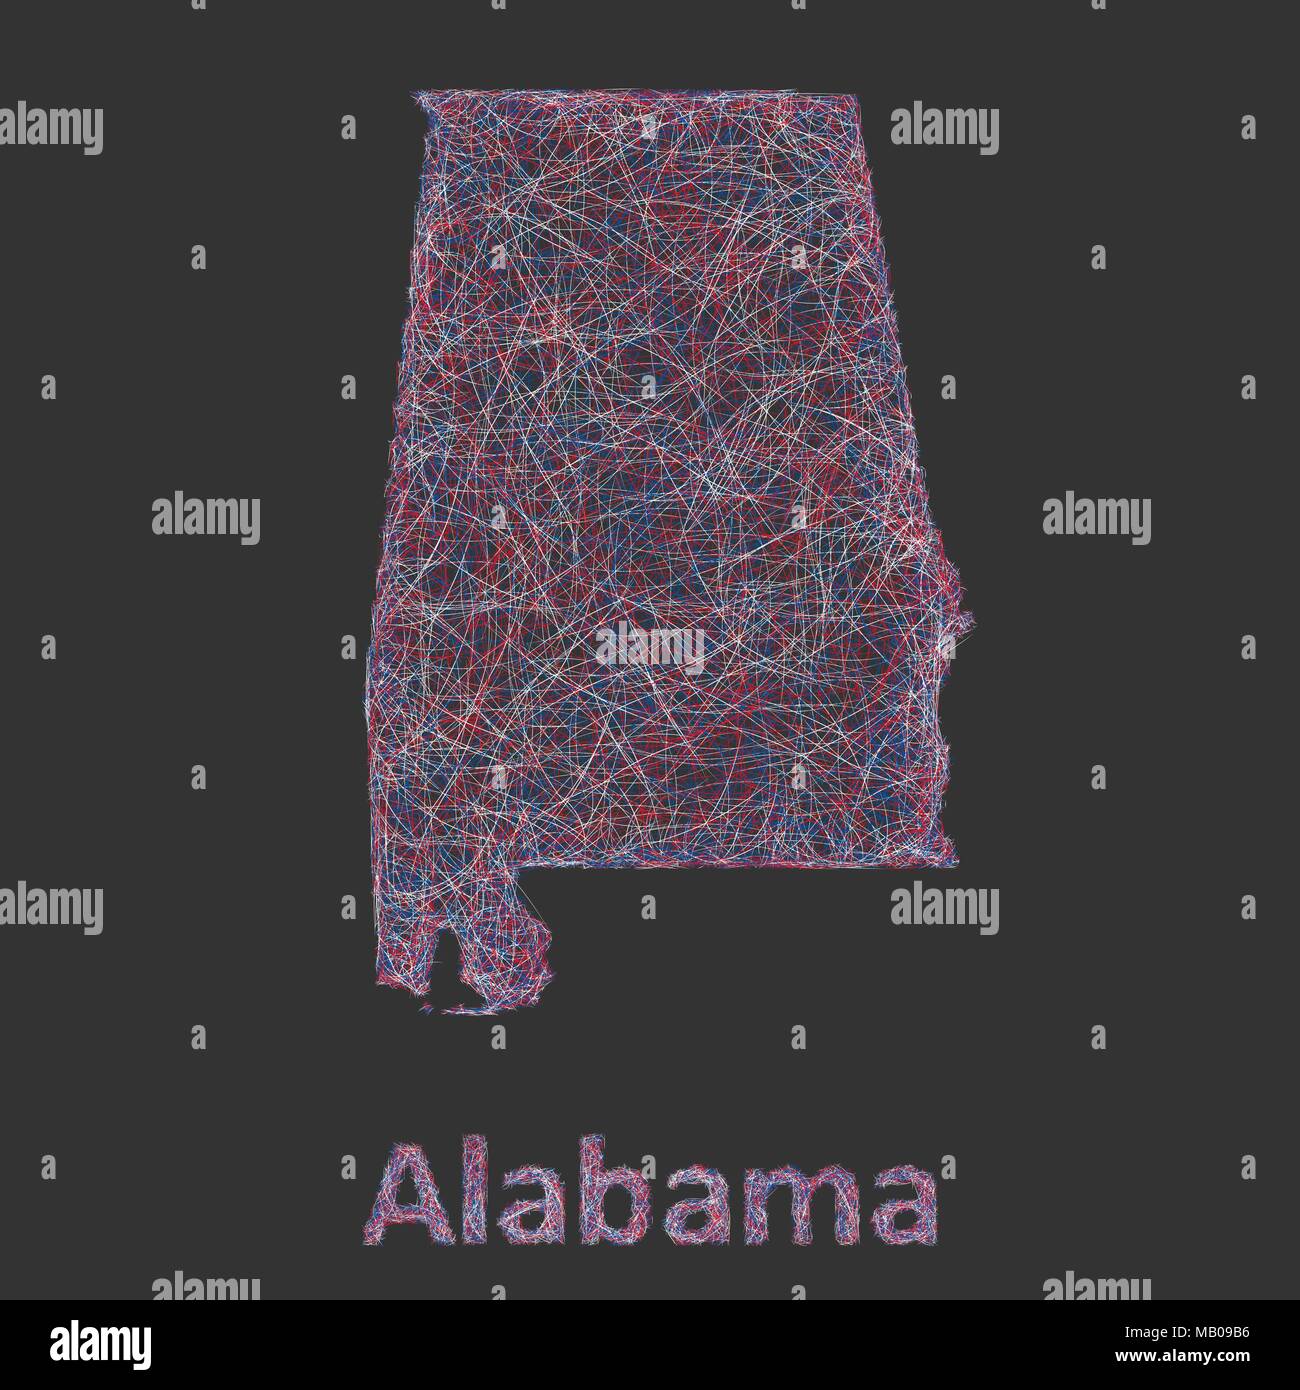 Bunte Linie Kunst Karte von Alabama state Stock Vektor